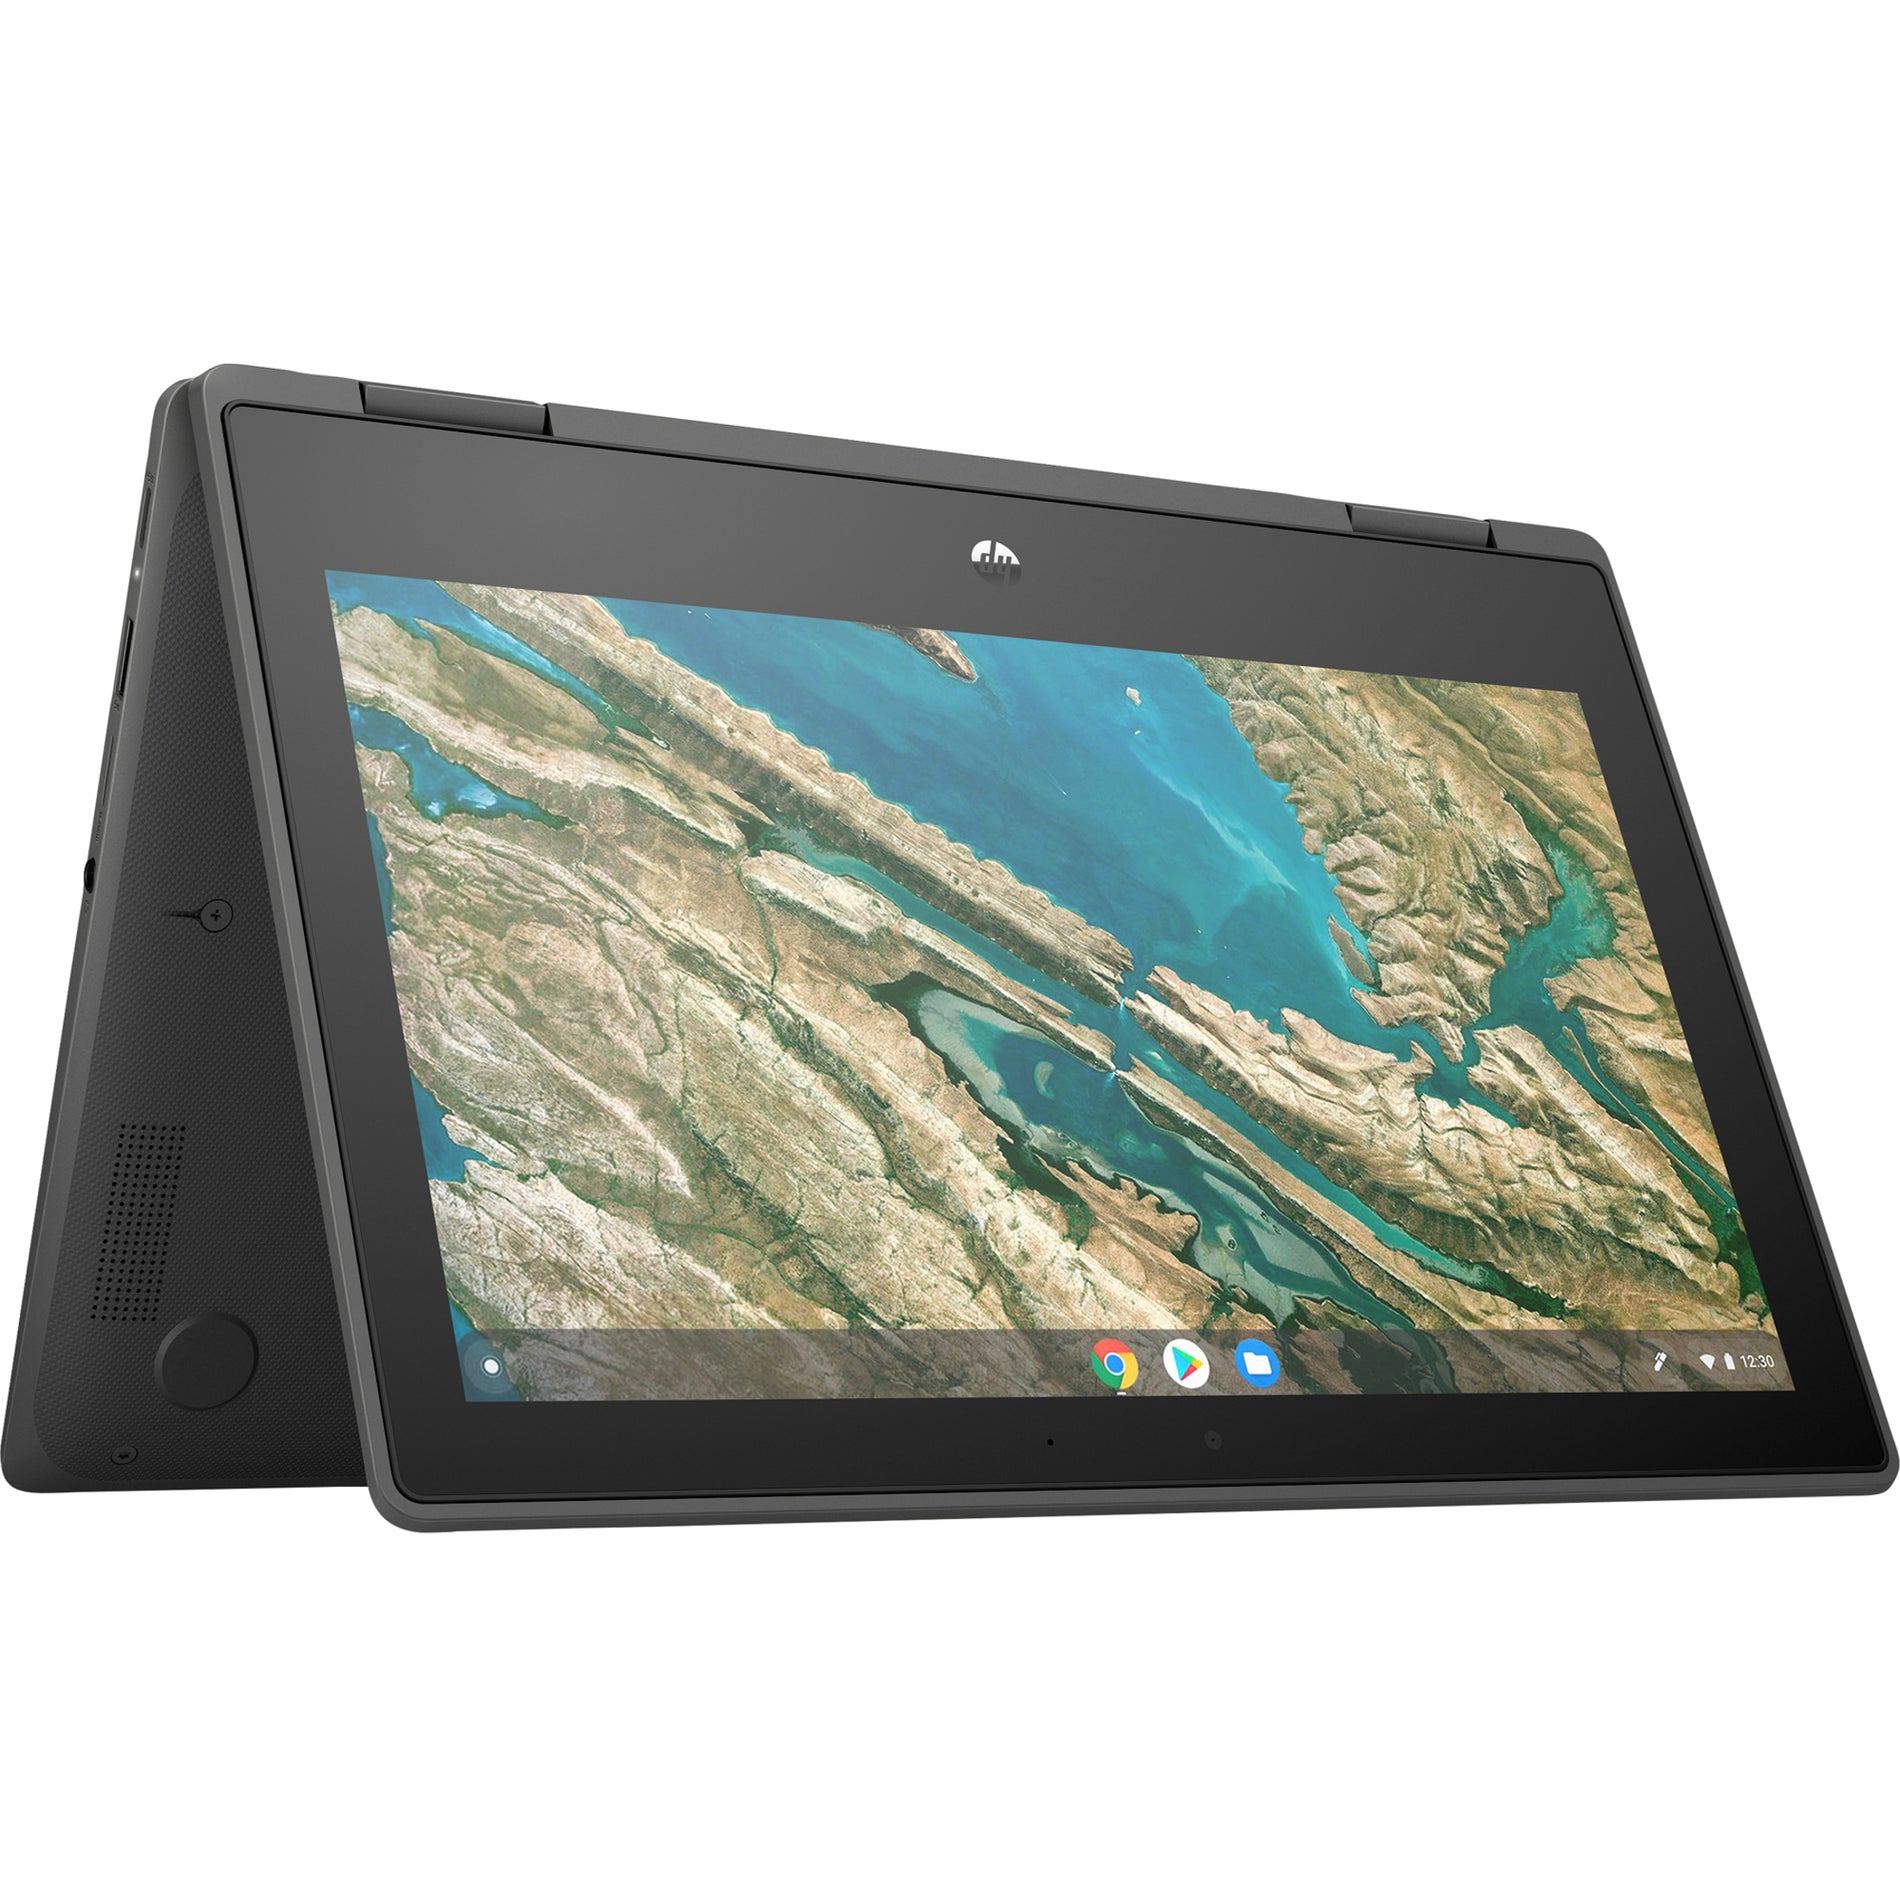 HP Chromebook x360 11 G3 EE 2 in 1 Chromebook, 11.6" Touchscreen, Intel Celeron N4020, 4GB RAM, 32GB Flash Memory